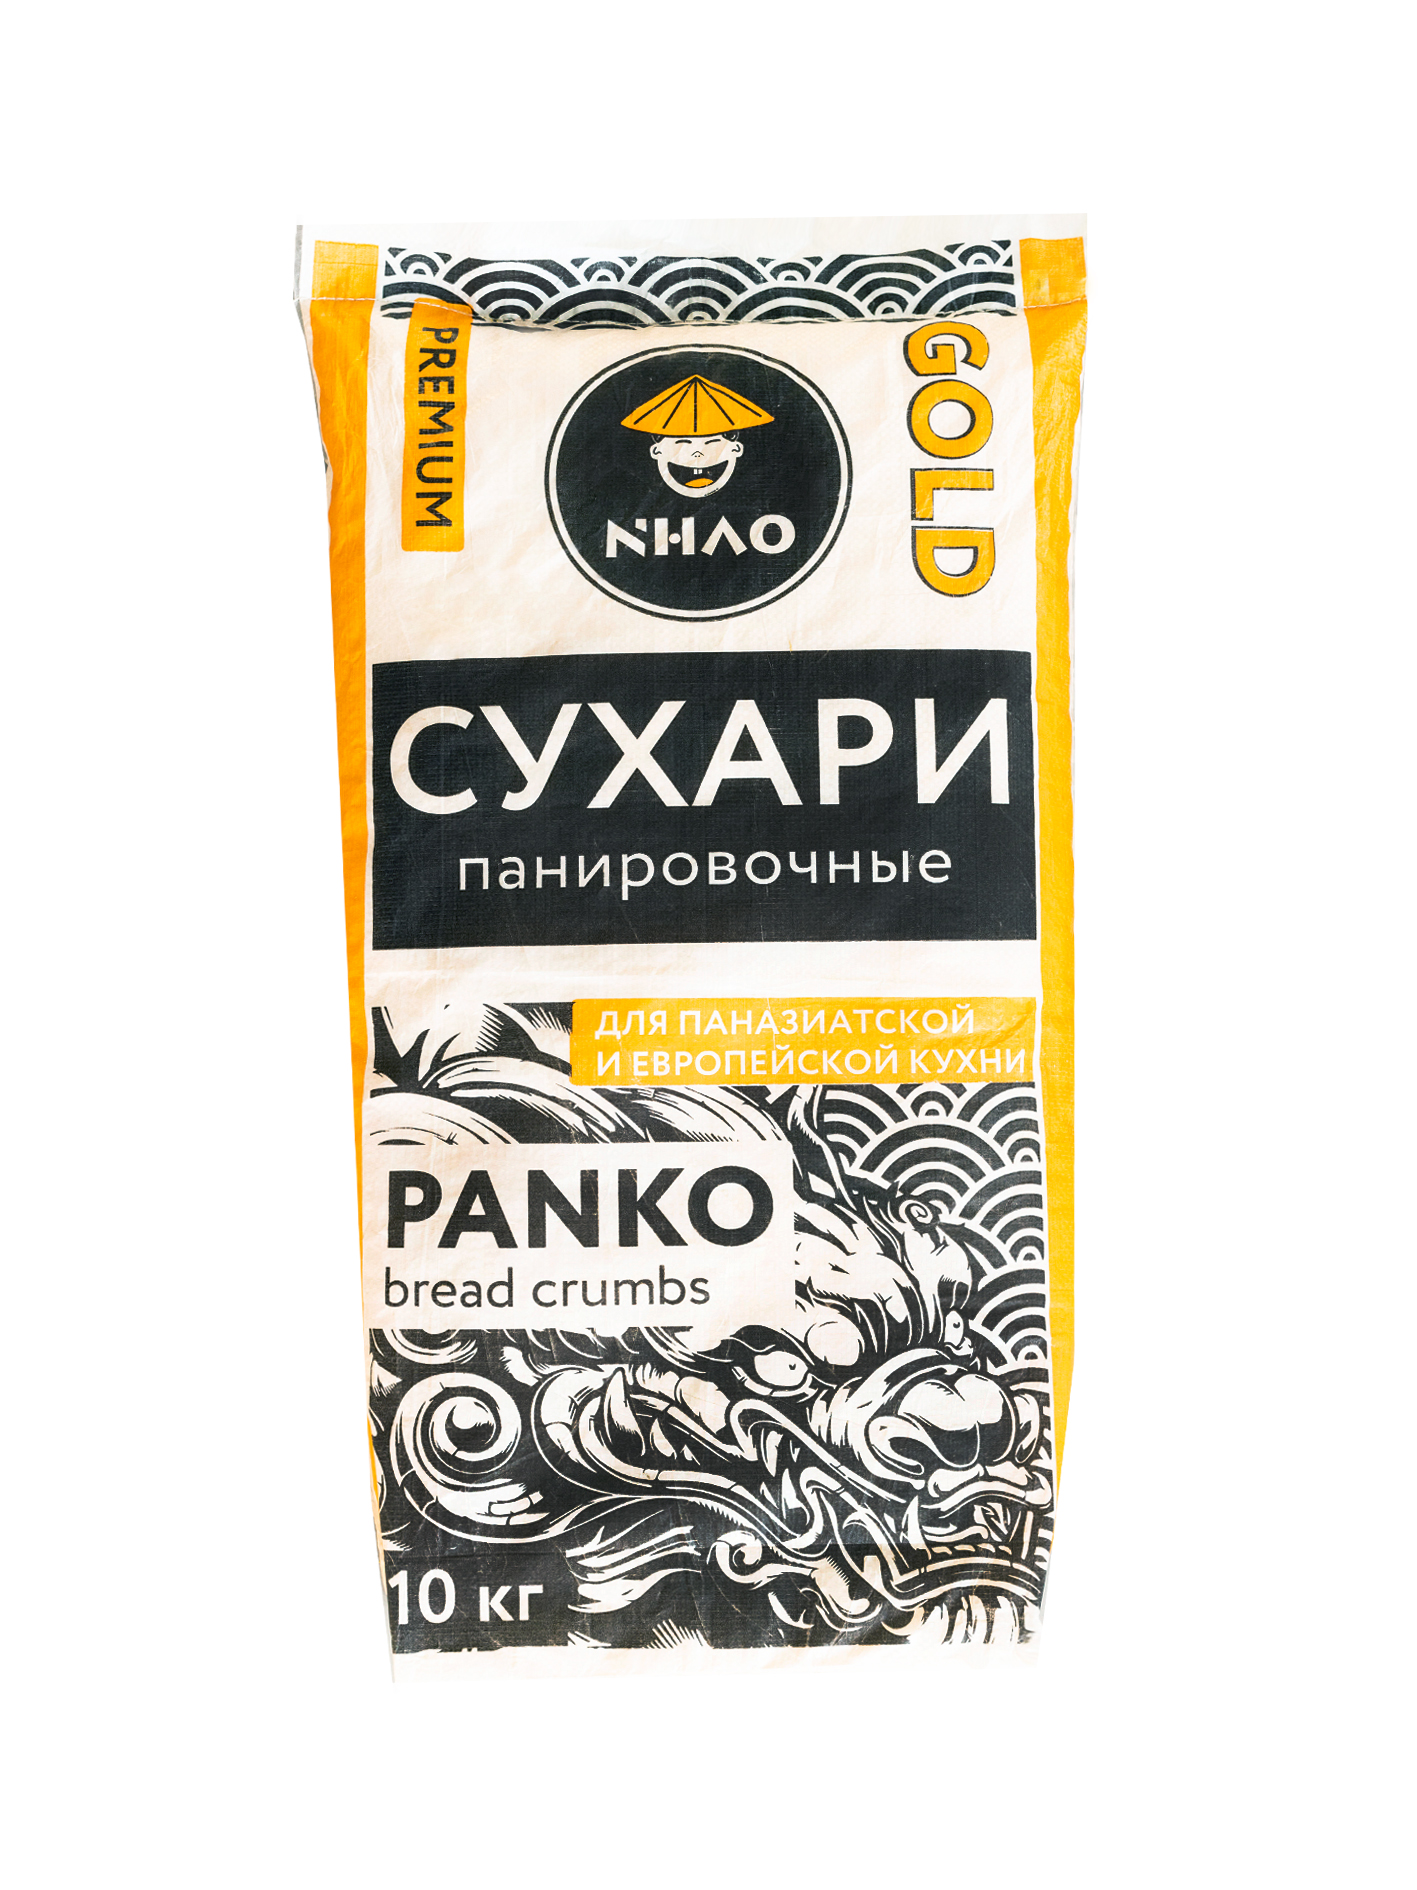 СУХАРИ PANKO GOLD   NIHAO 10 КГ